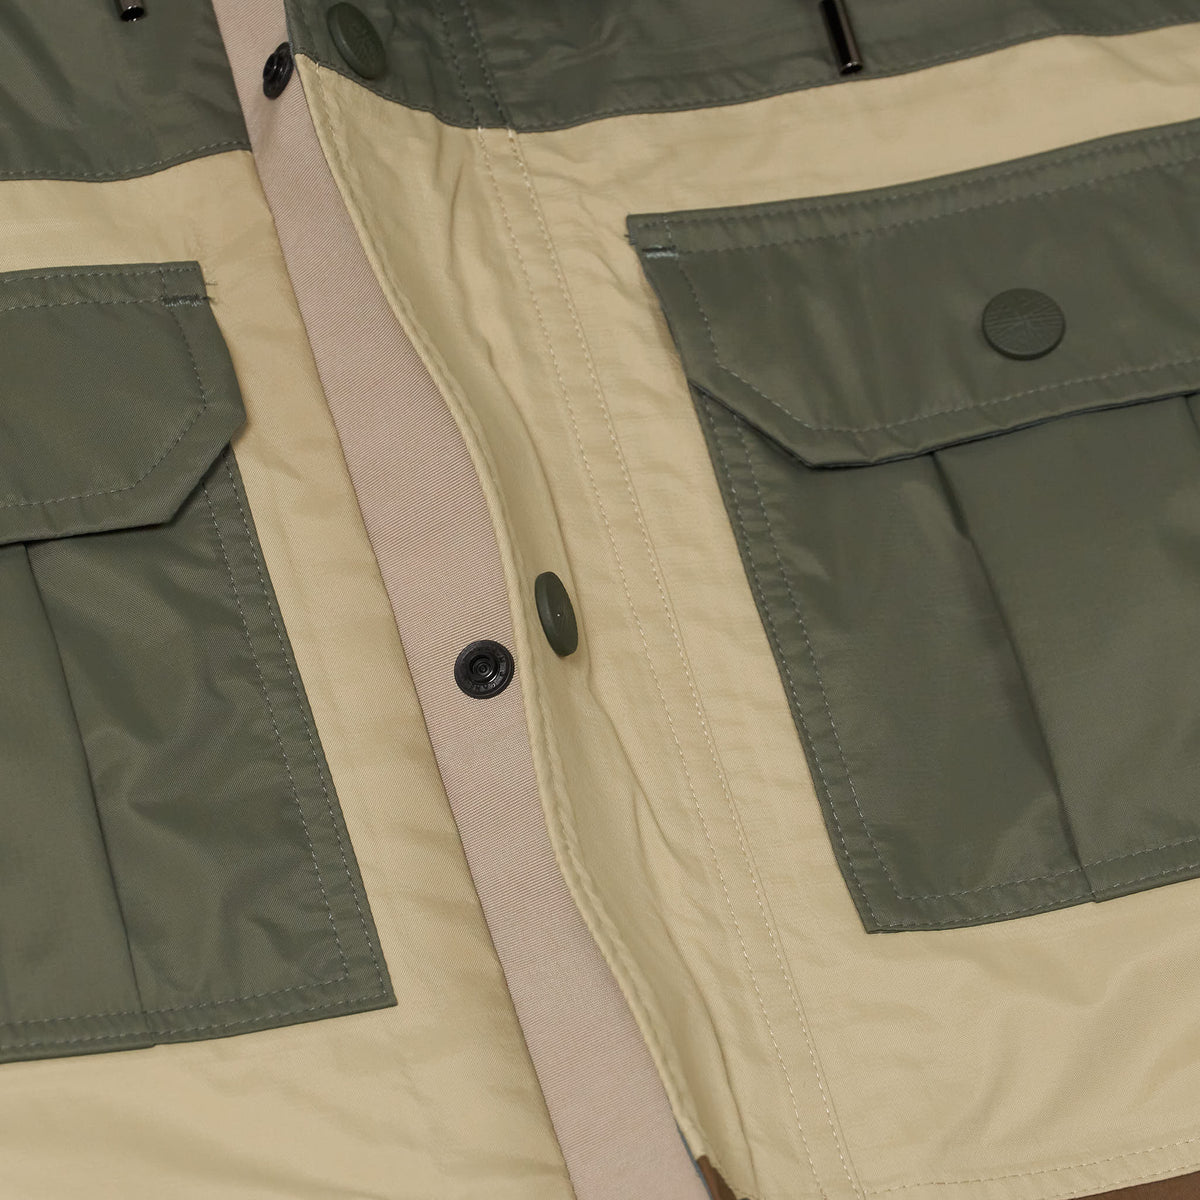 White Mountaineering Water-Resistant Field Jacket